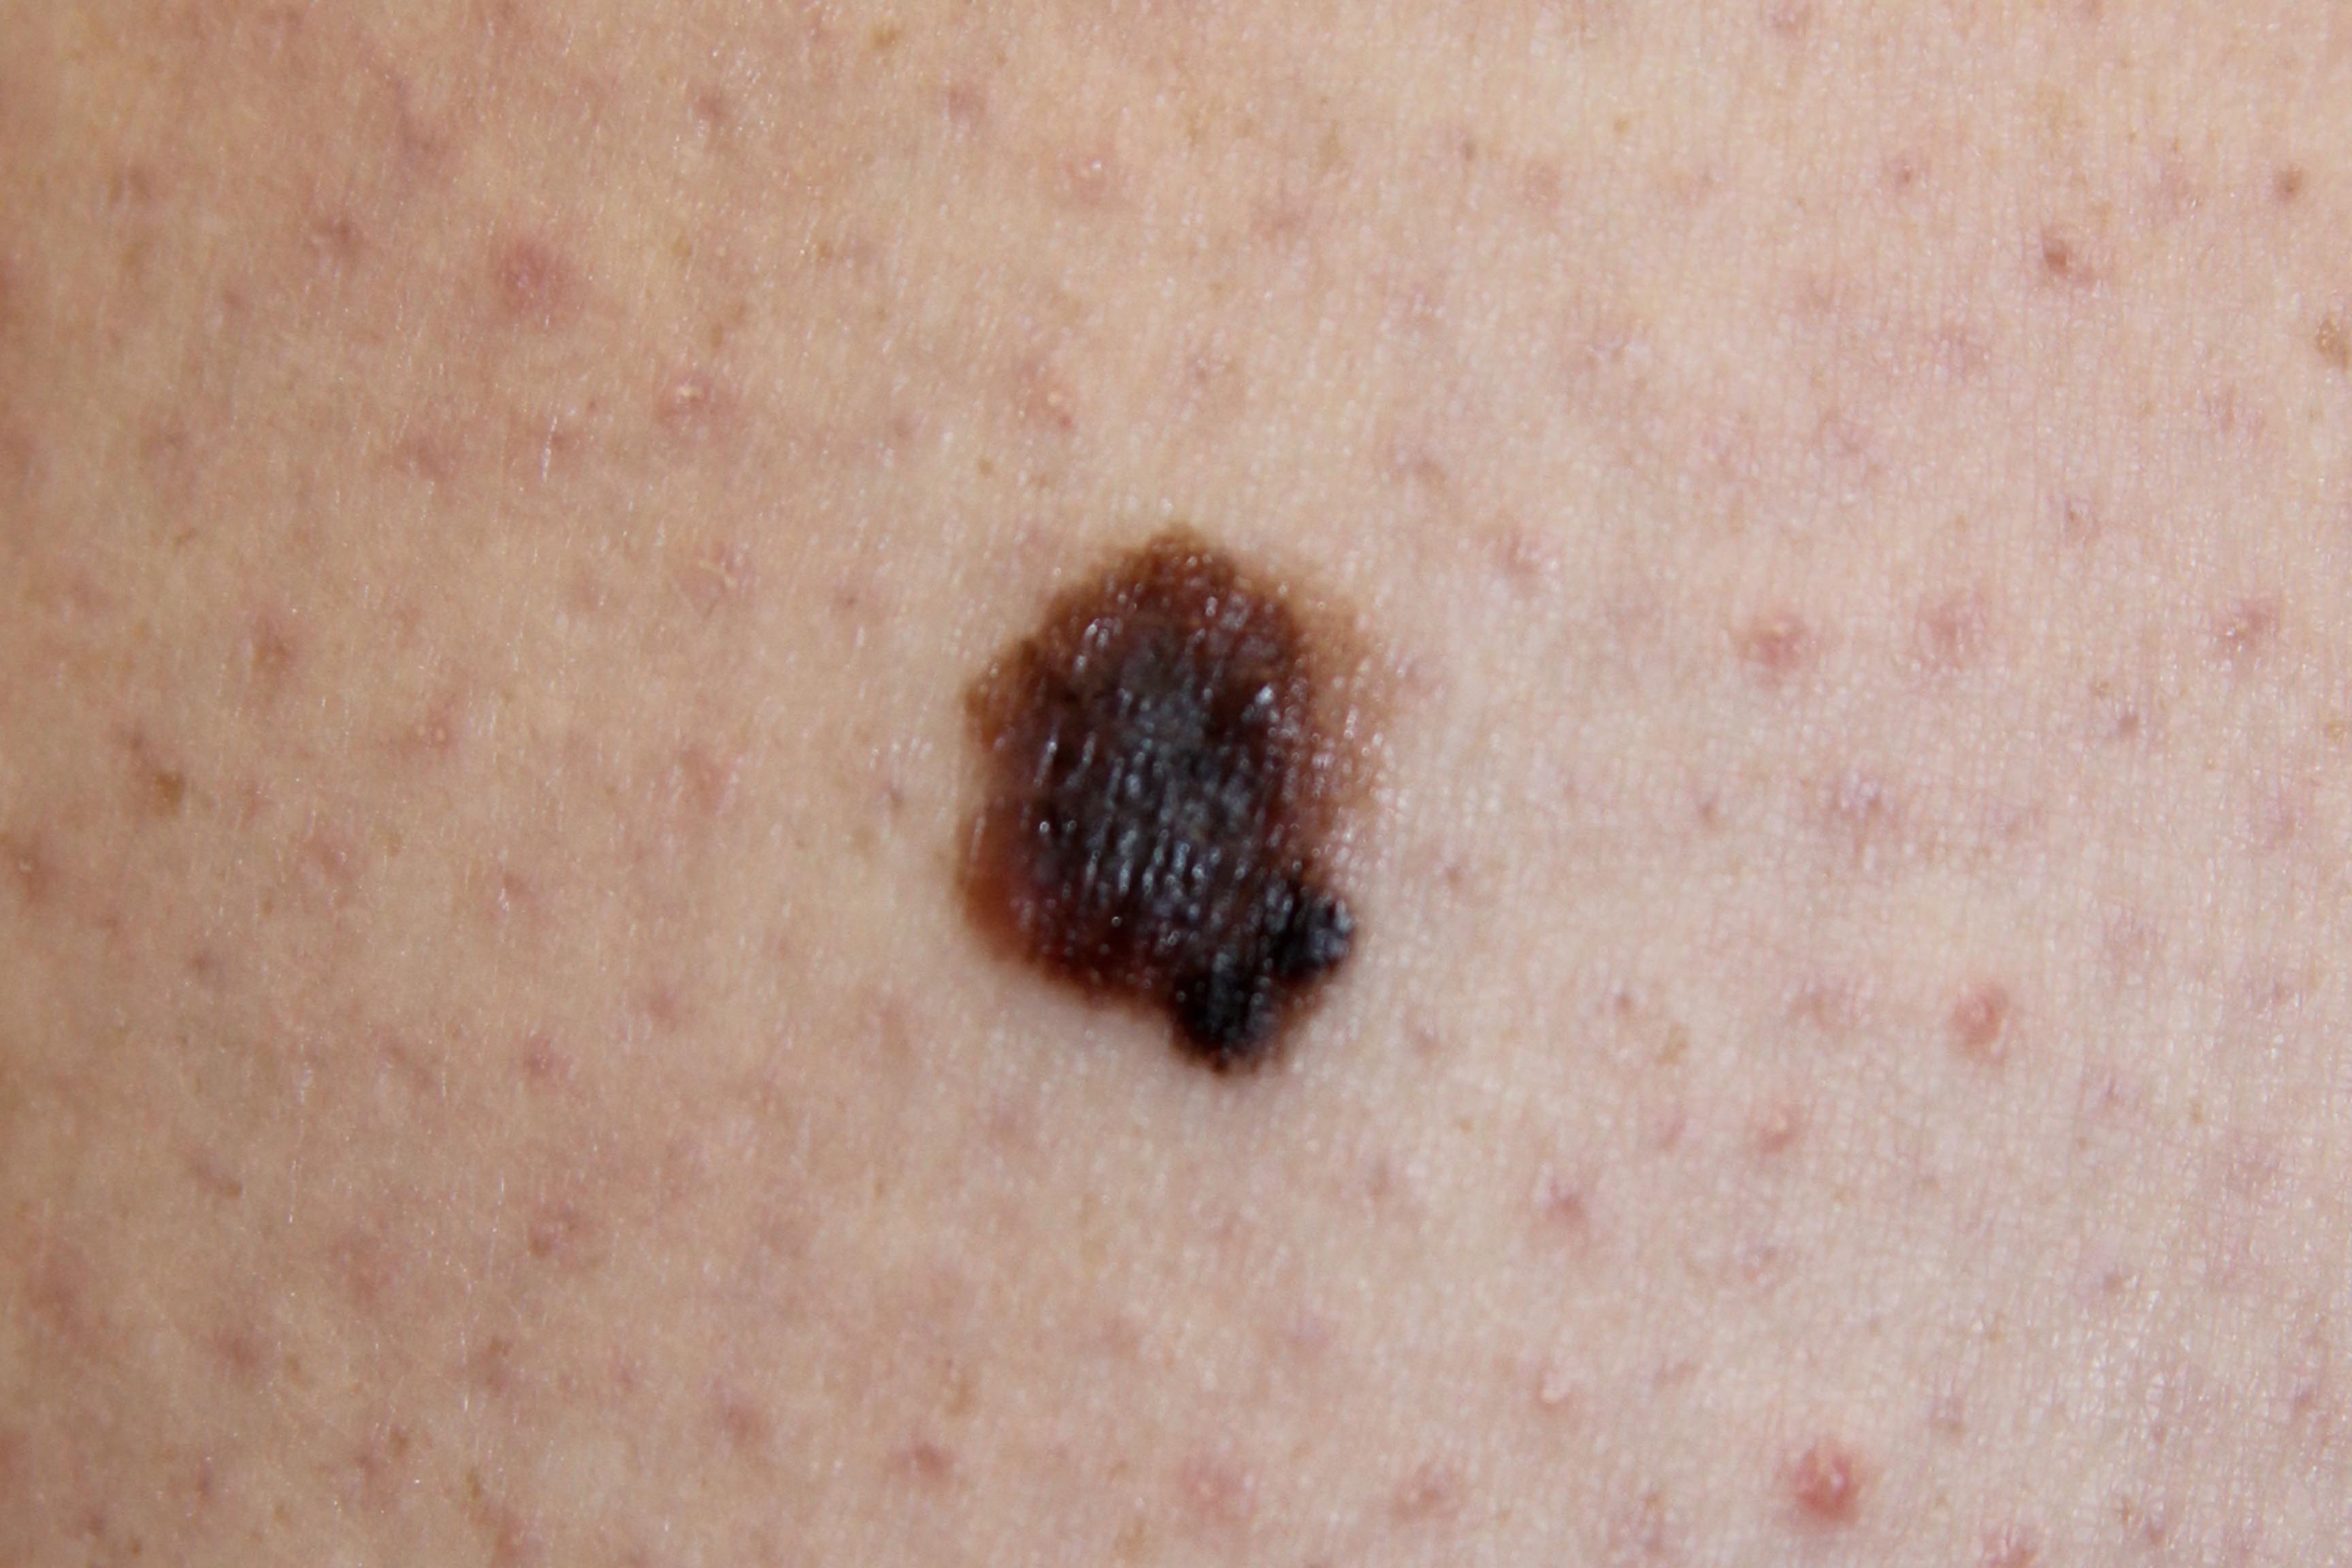 malignant skin cancer